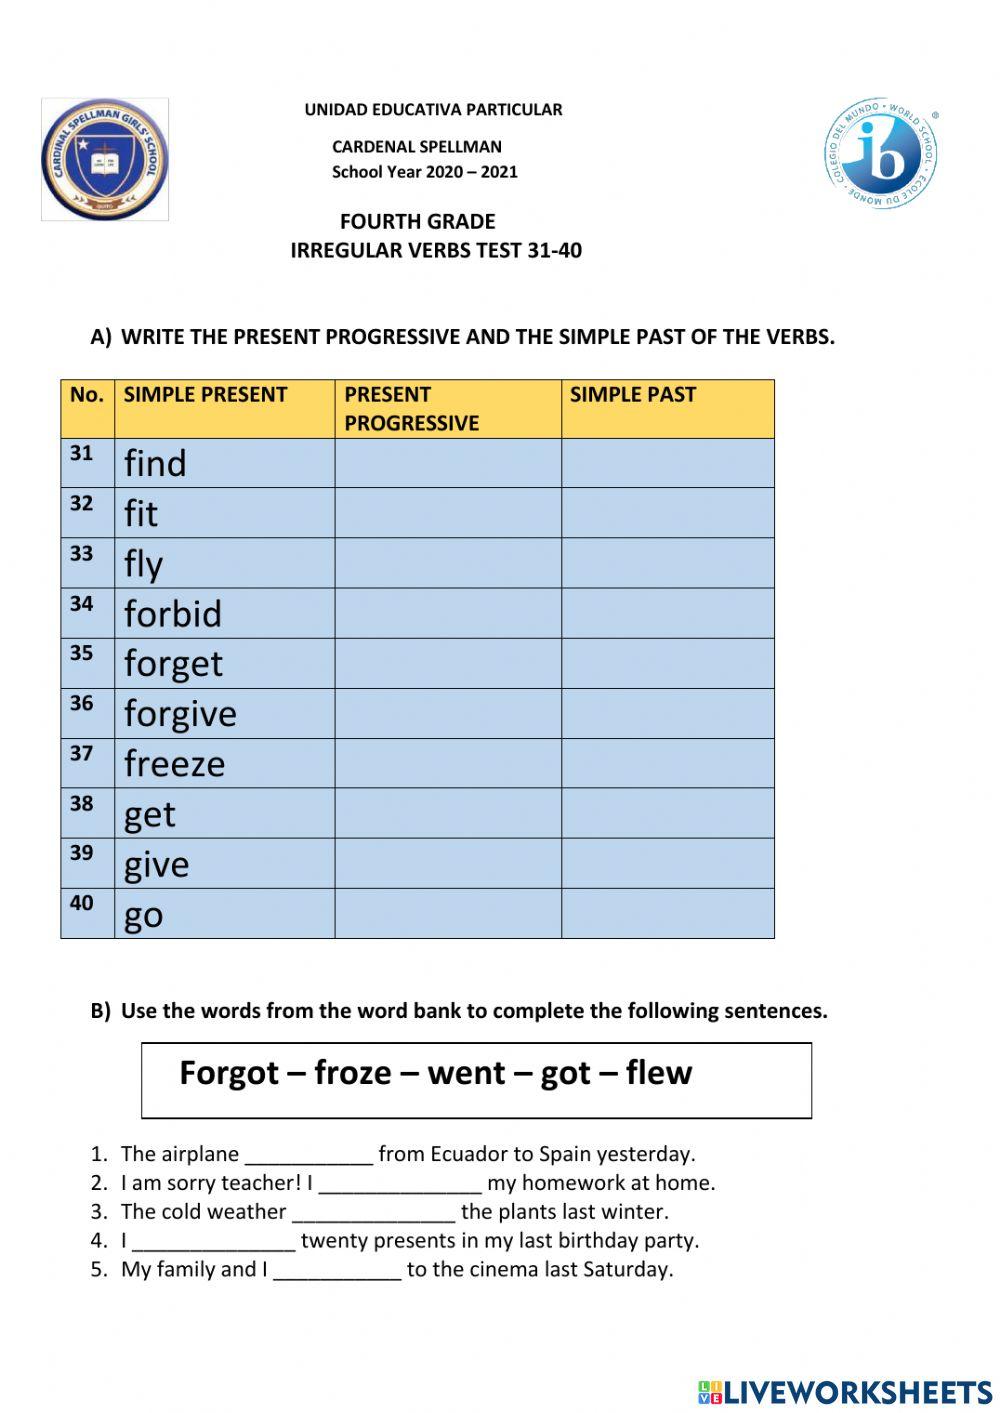 Irregular verbs test 31- 40